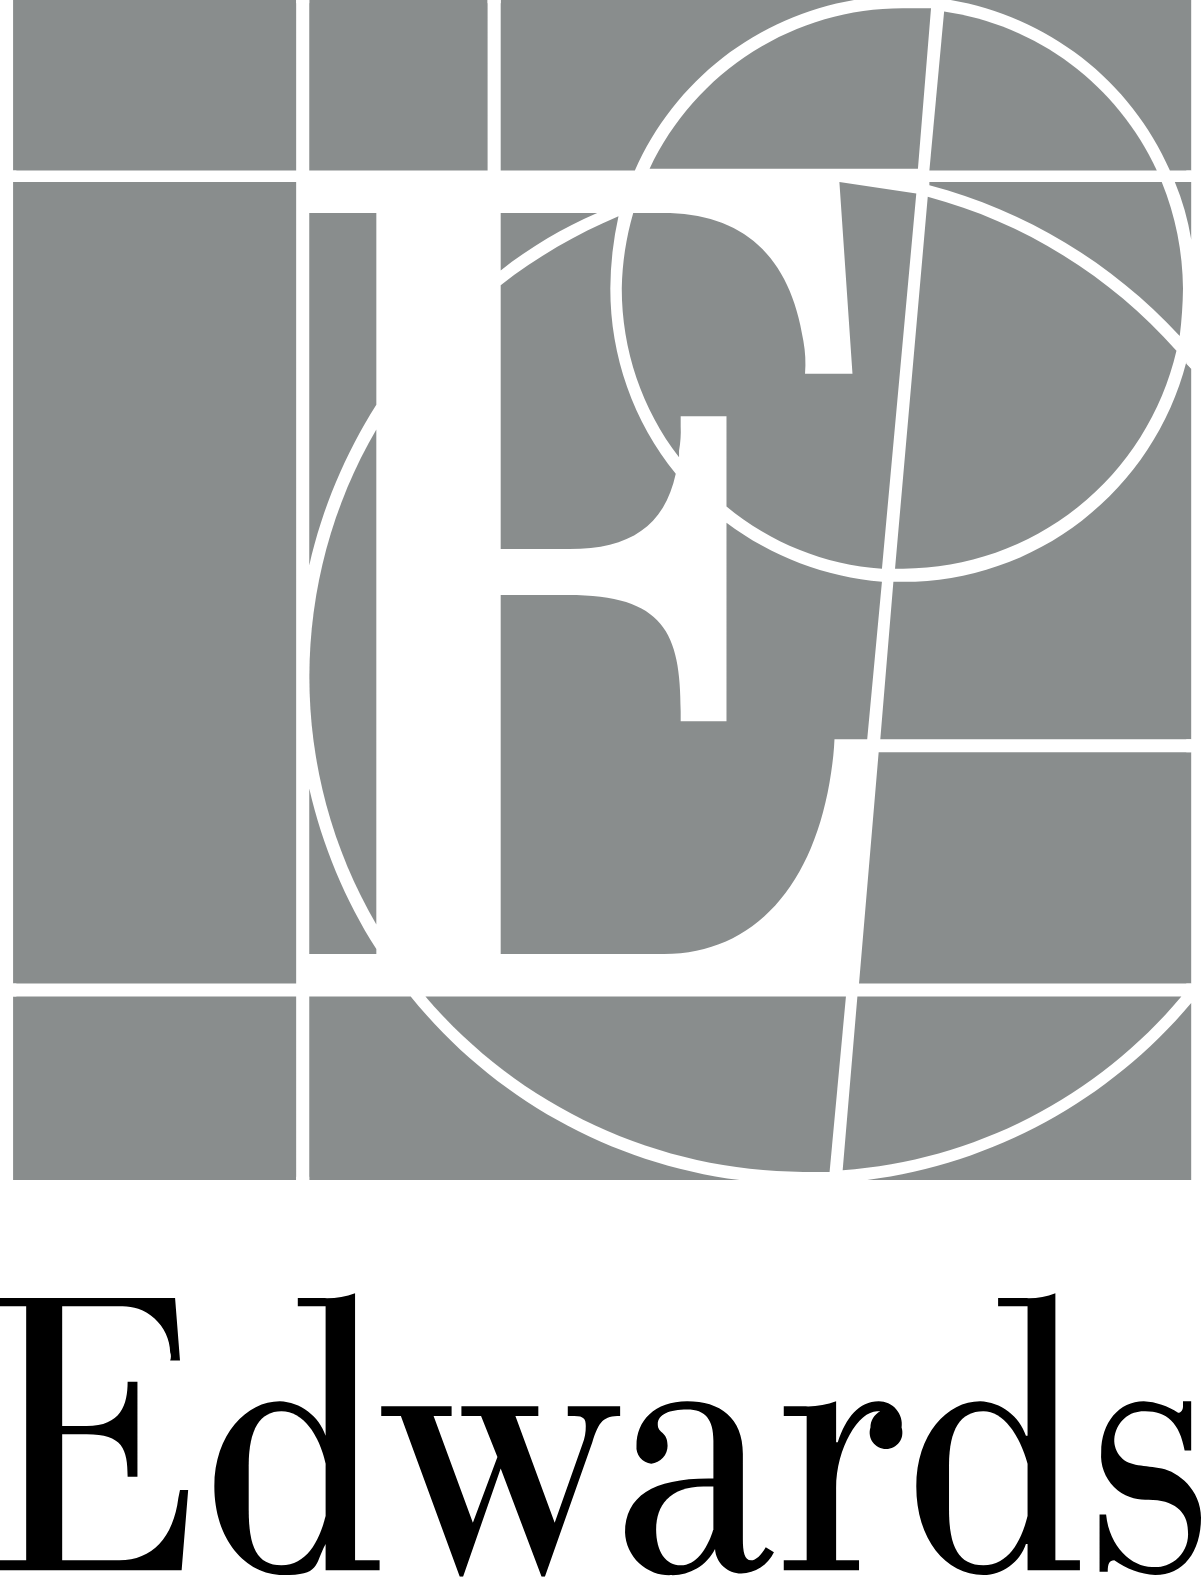 Edwards Lifesciences logo large (transparent PNG)